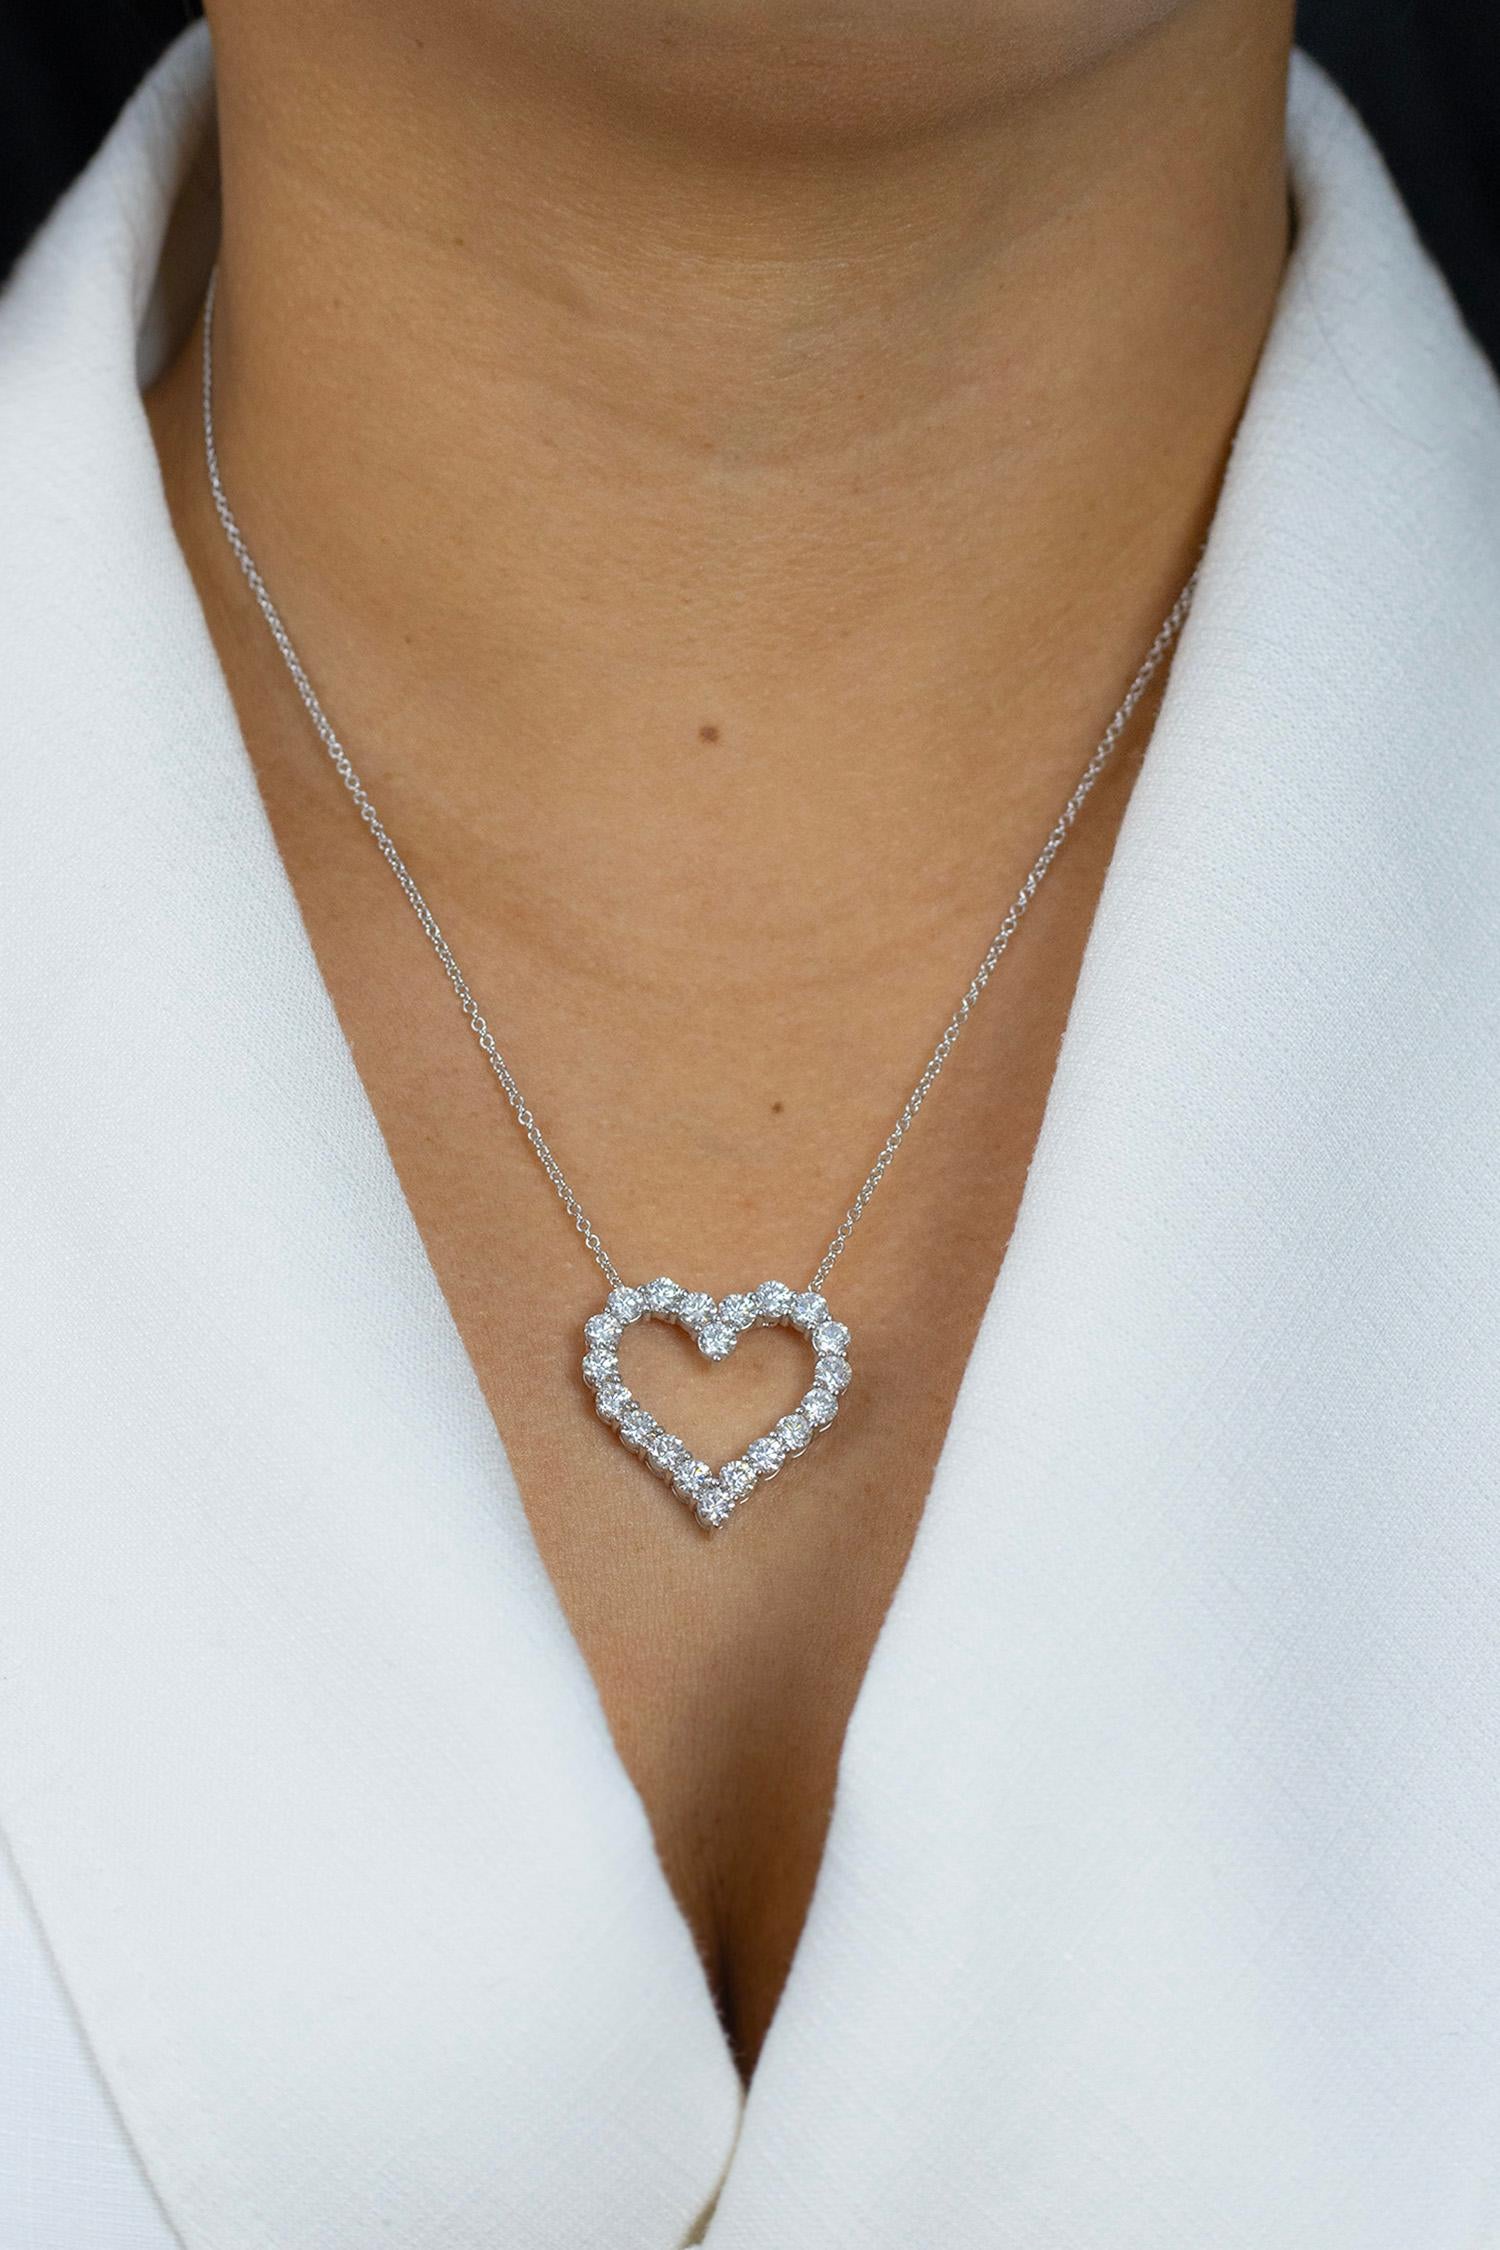 4.44 Carats Total Brilliante Diamond Round Open-Work Heart Pendant Necklace Neuf - En vente à New York, NY